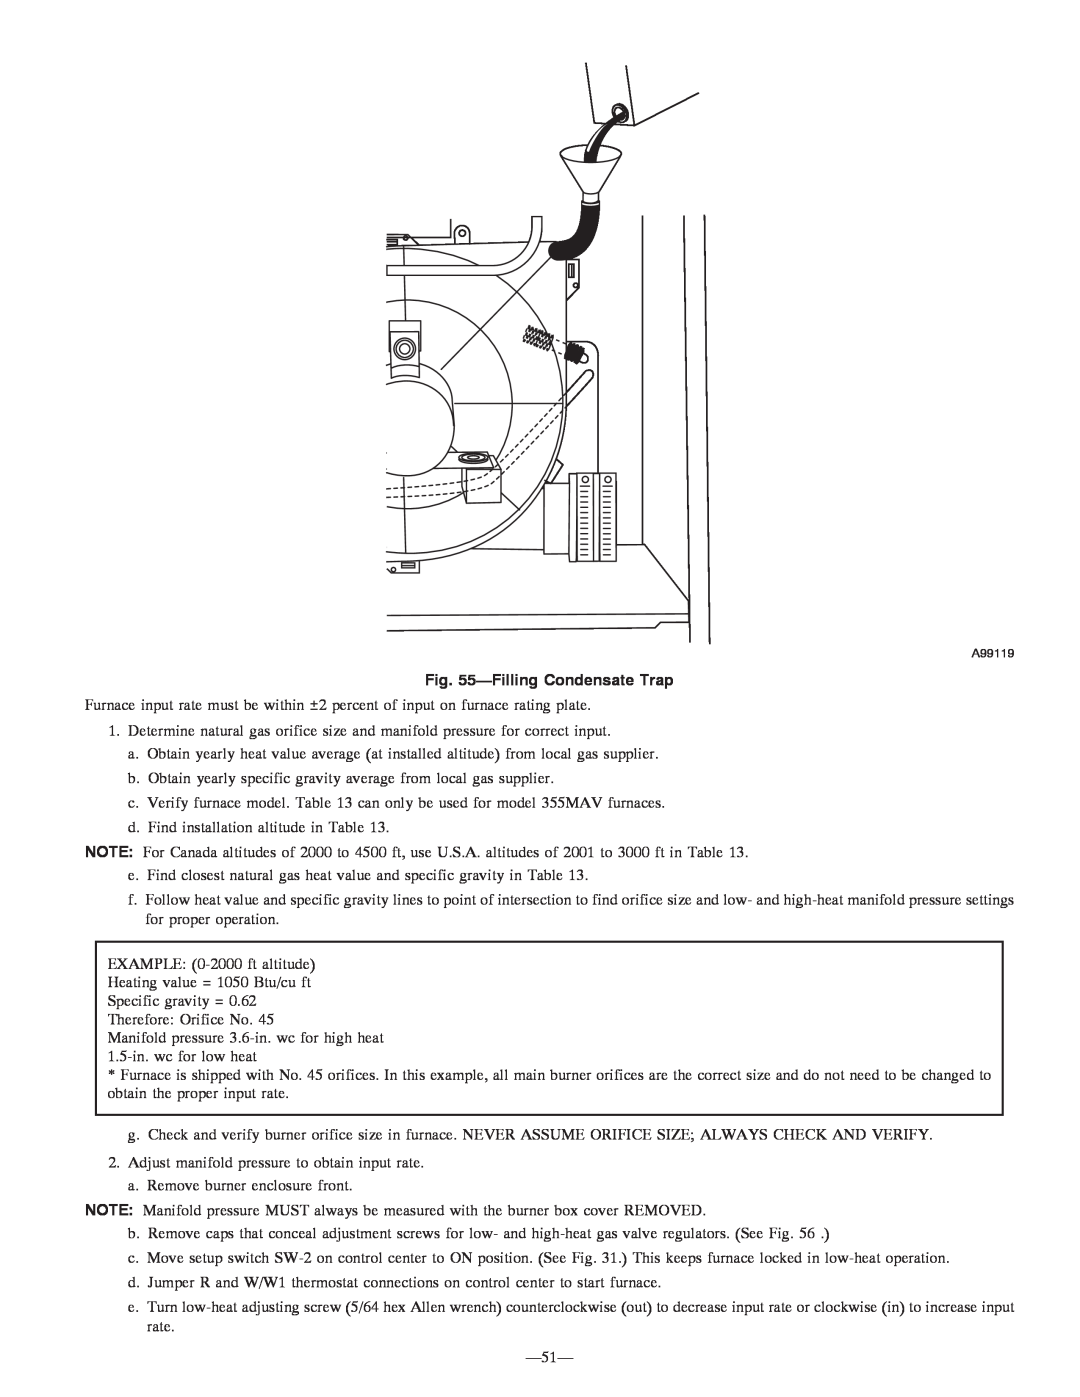 Bryant 355MAV instruction manual FillingCondensate Trap 